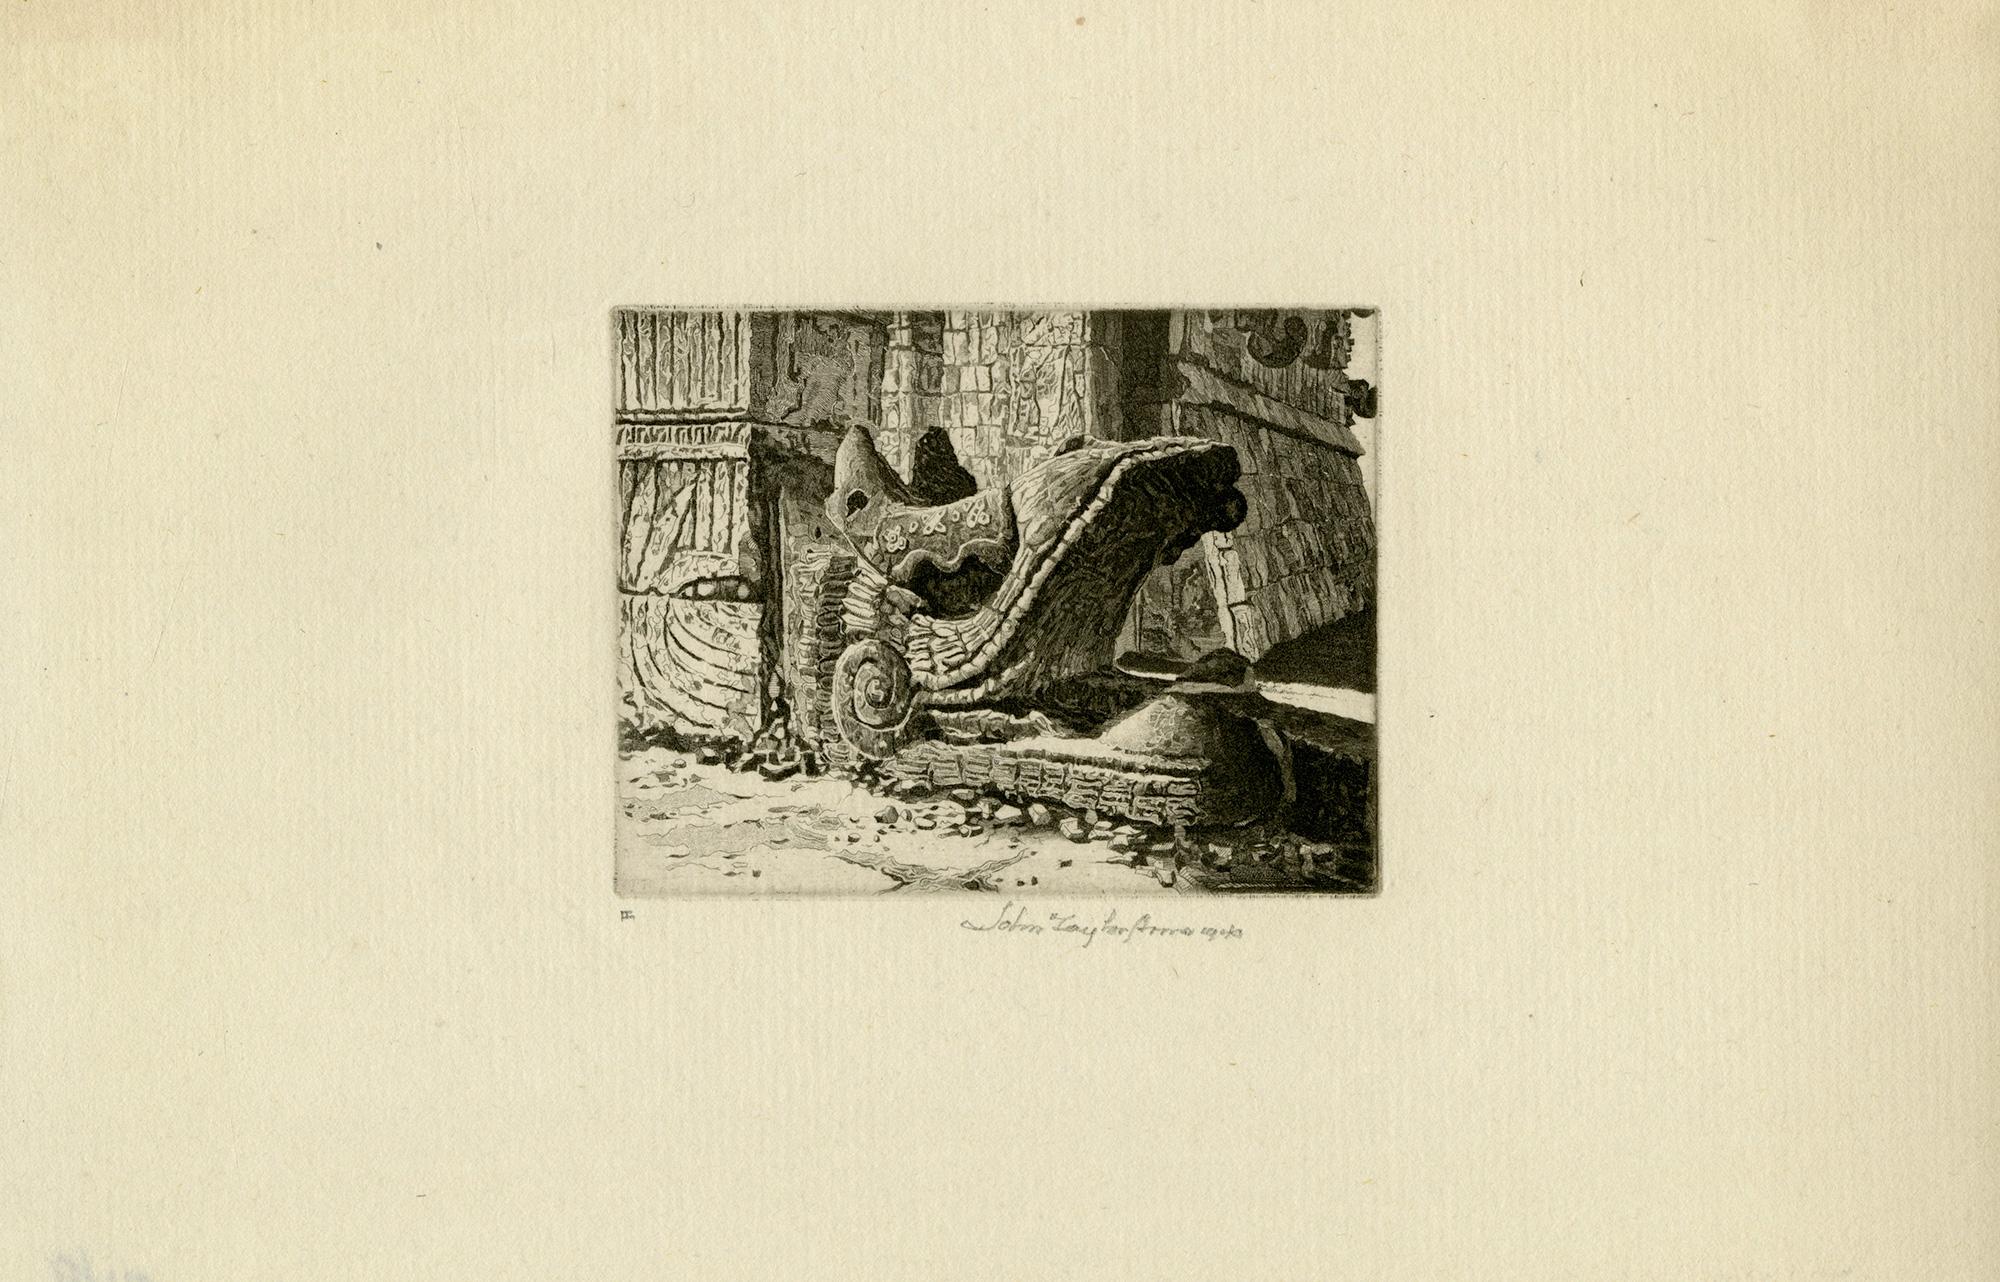 Plumed Serpent, Chichén Itzá - Print by John Taylor Arms